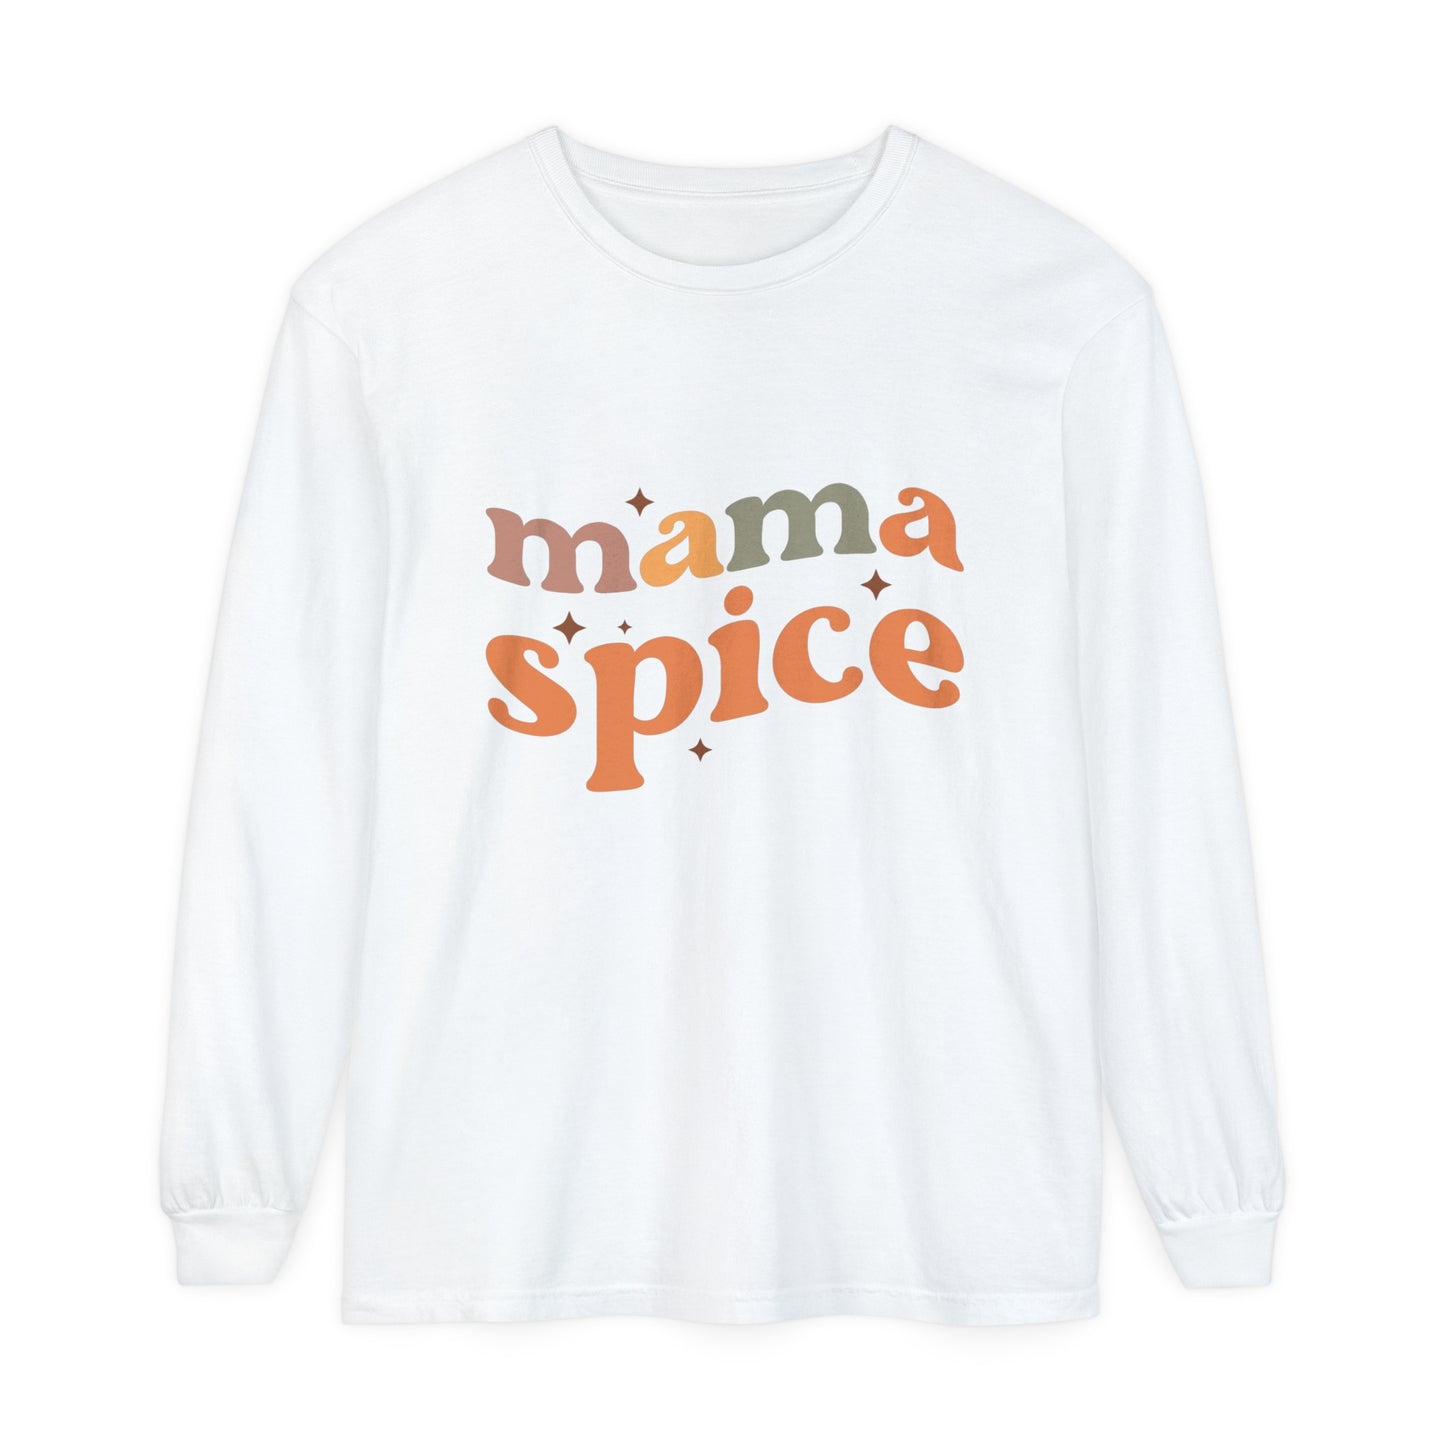 Style 3 Mama Spice Long Sleeve T-Shirt